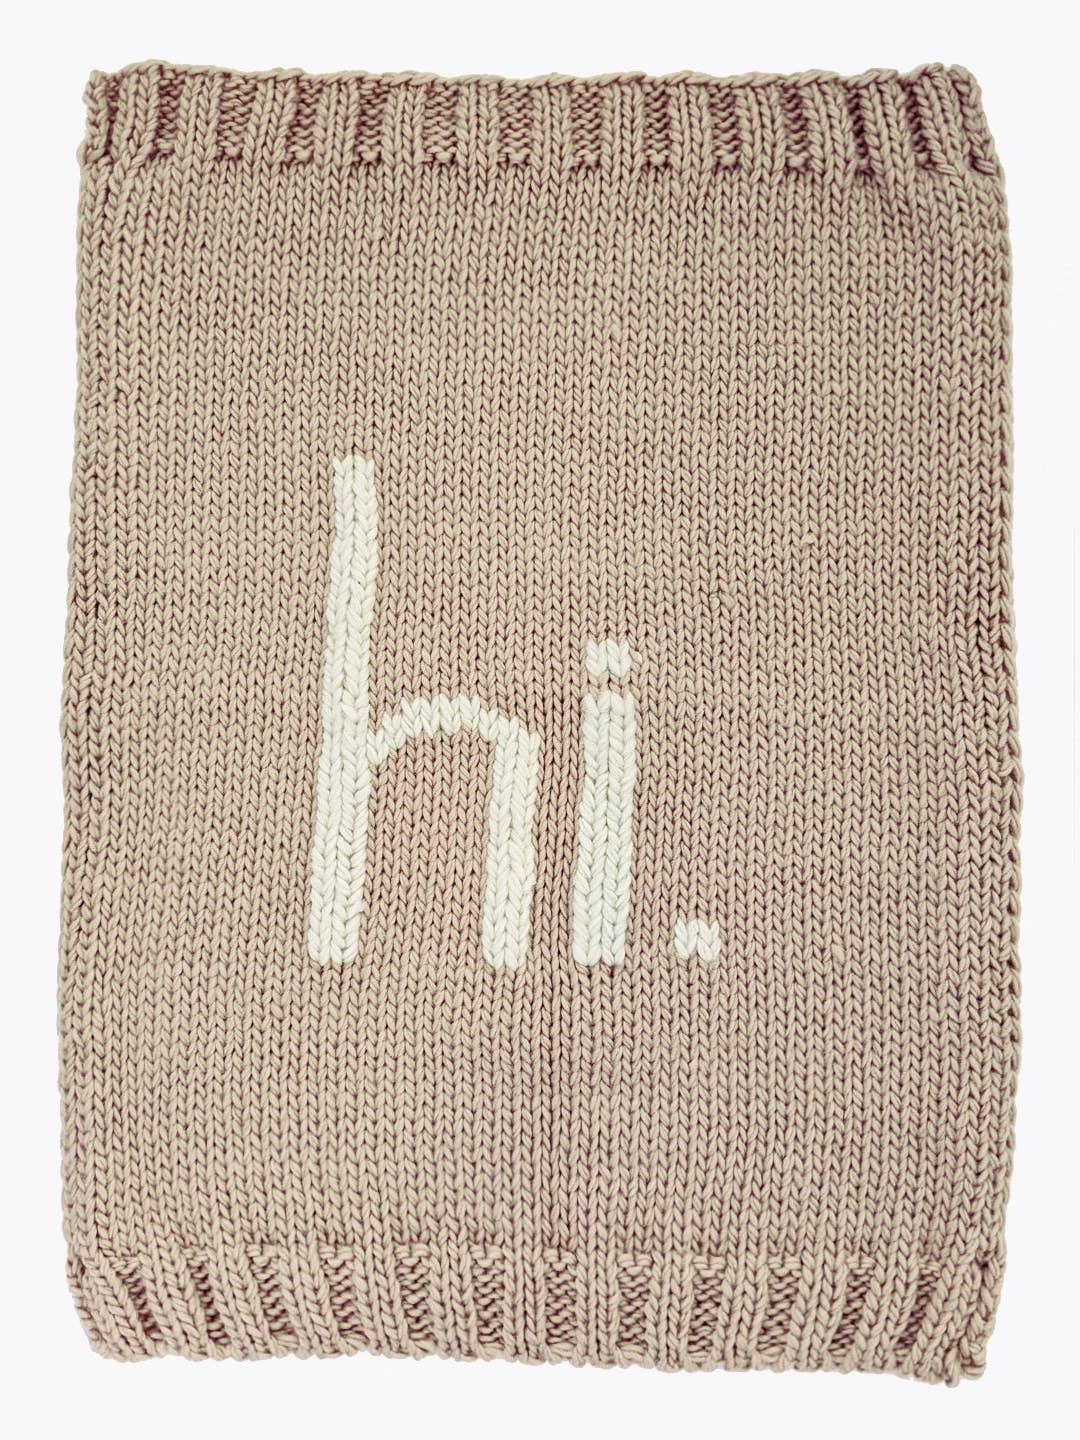 "hi" Hand Knit Blanket Pebble